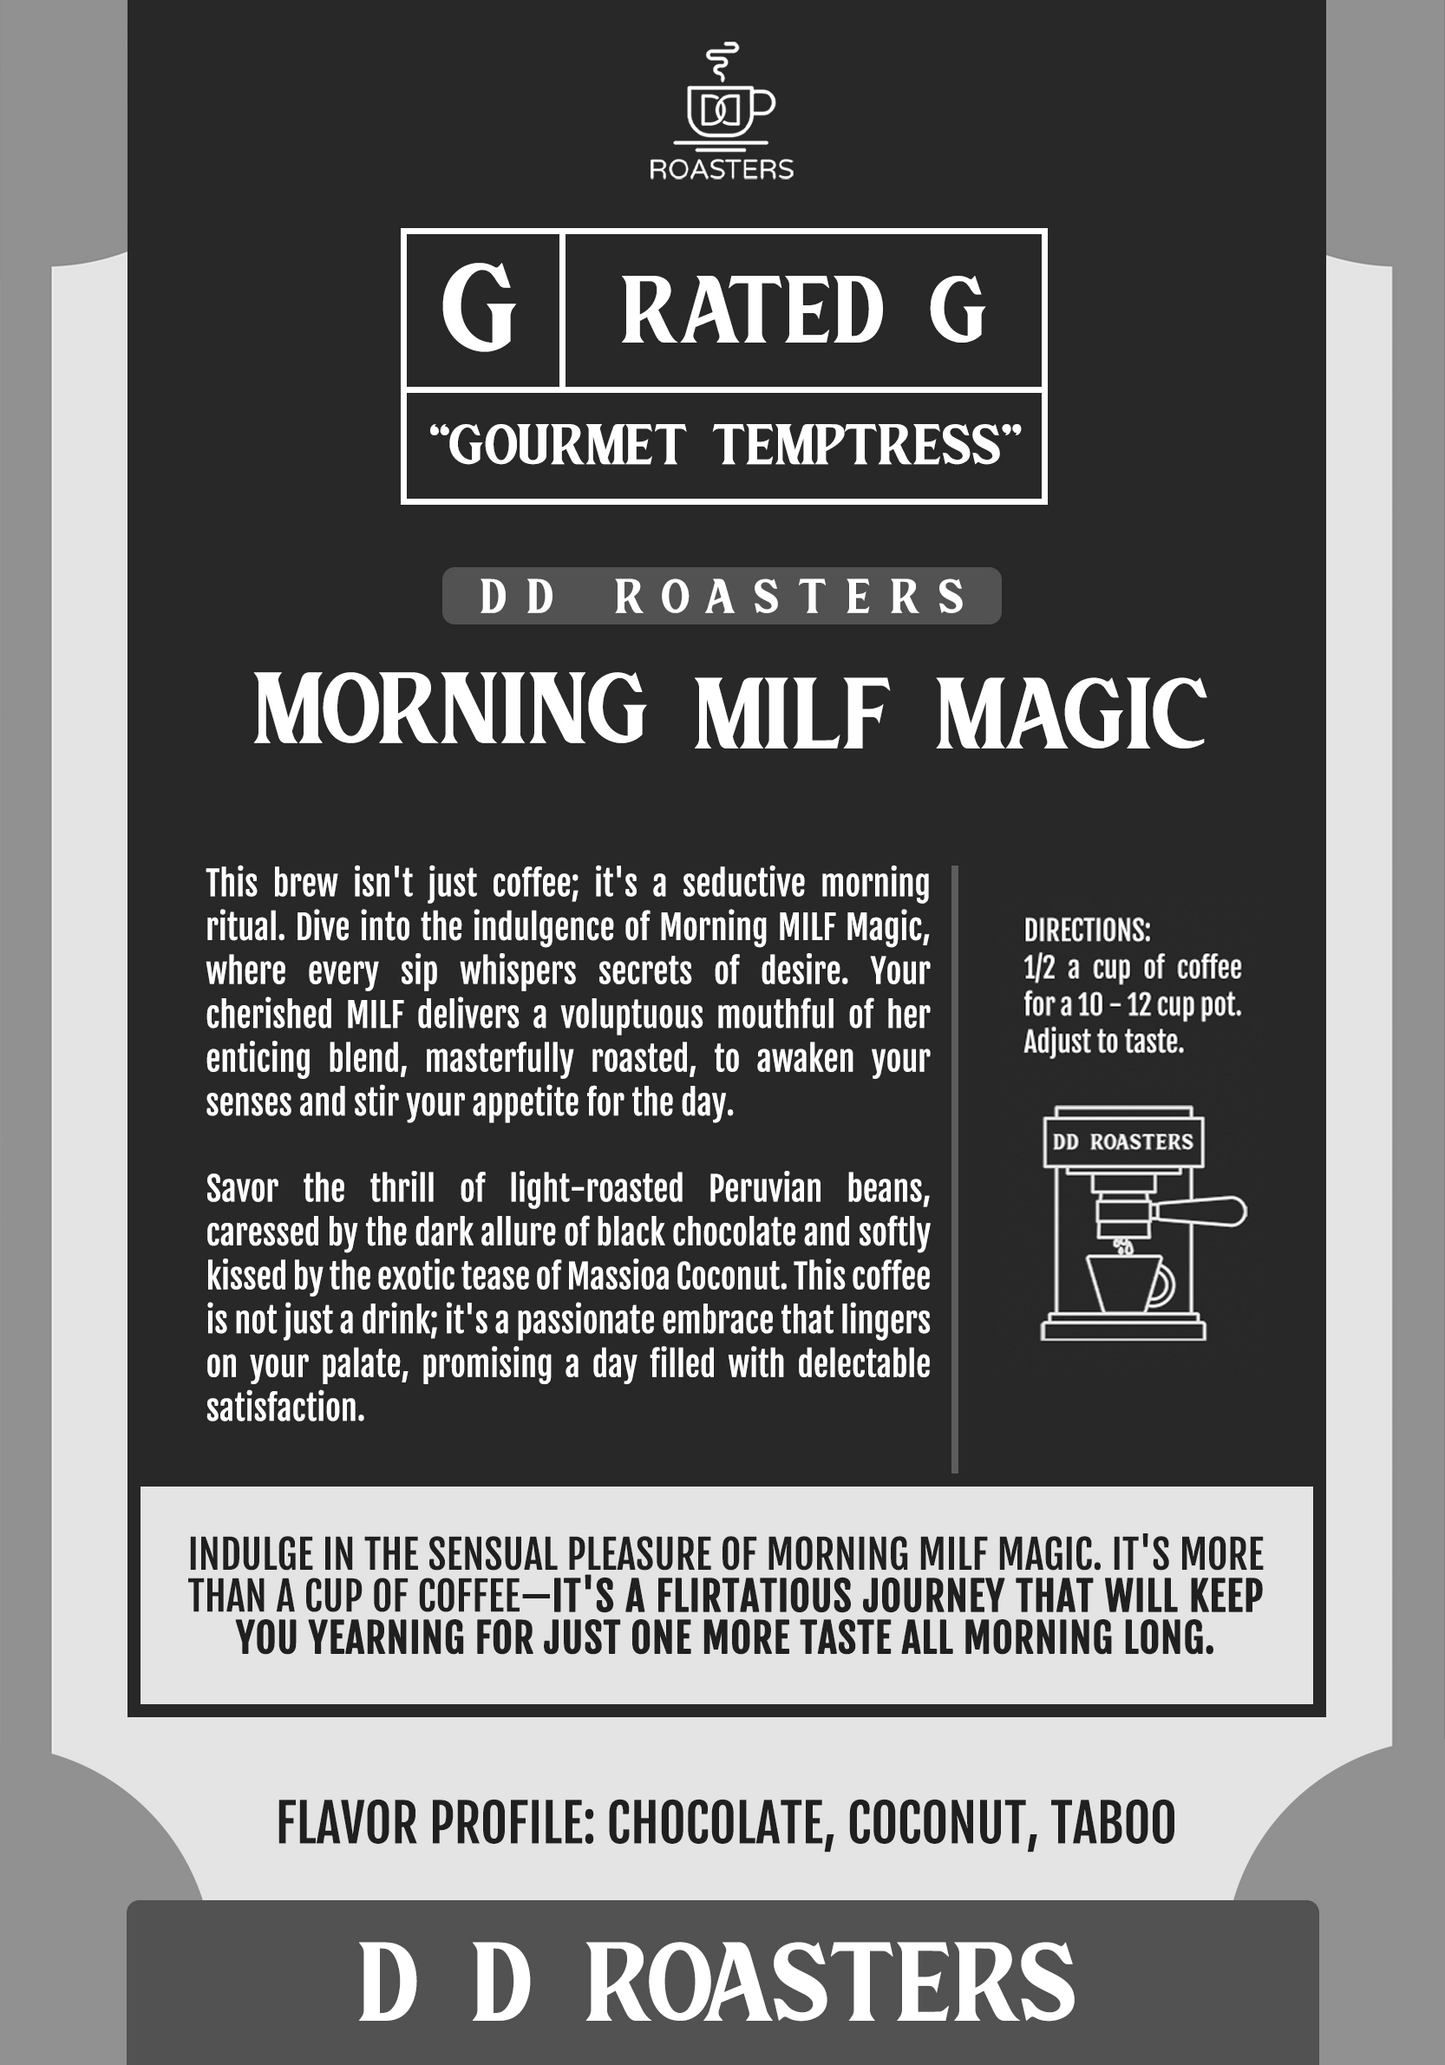 DD Roasters Morning MILF Magic